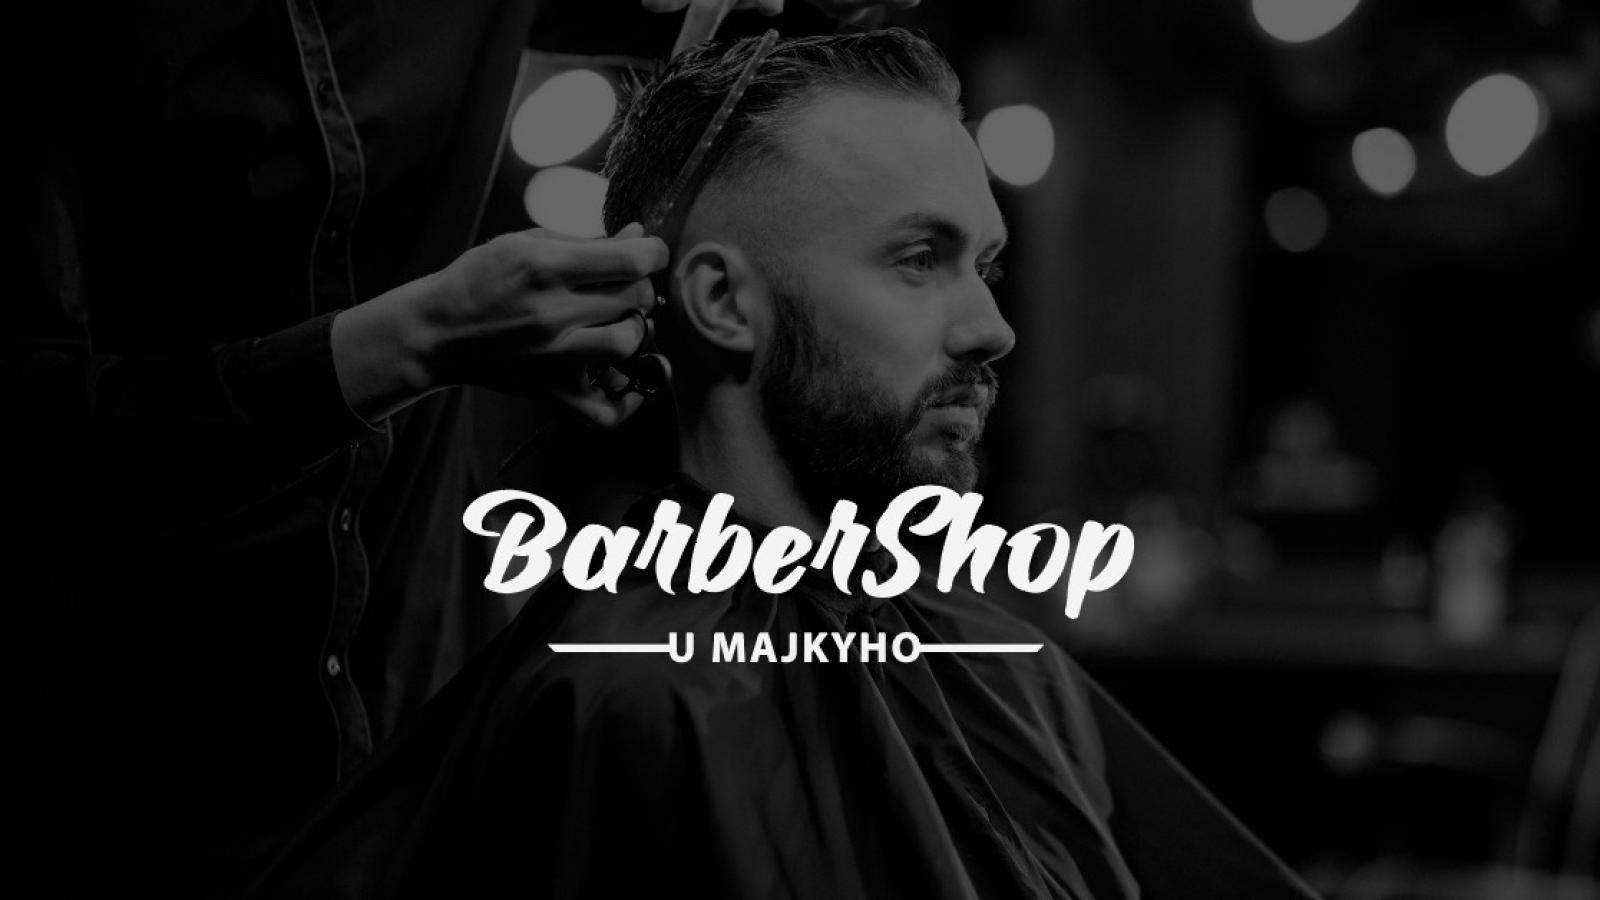 Barbershop U Majkyho